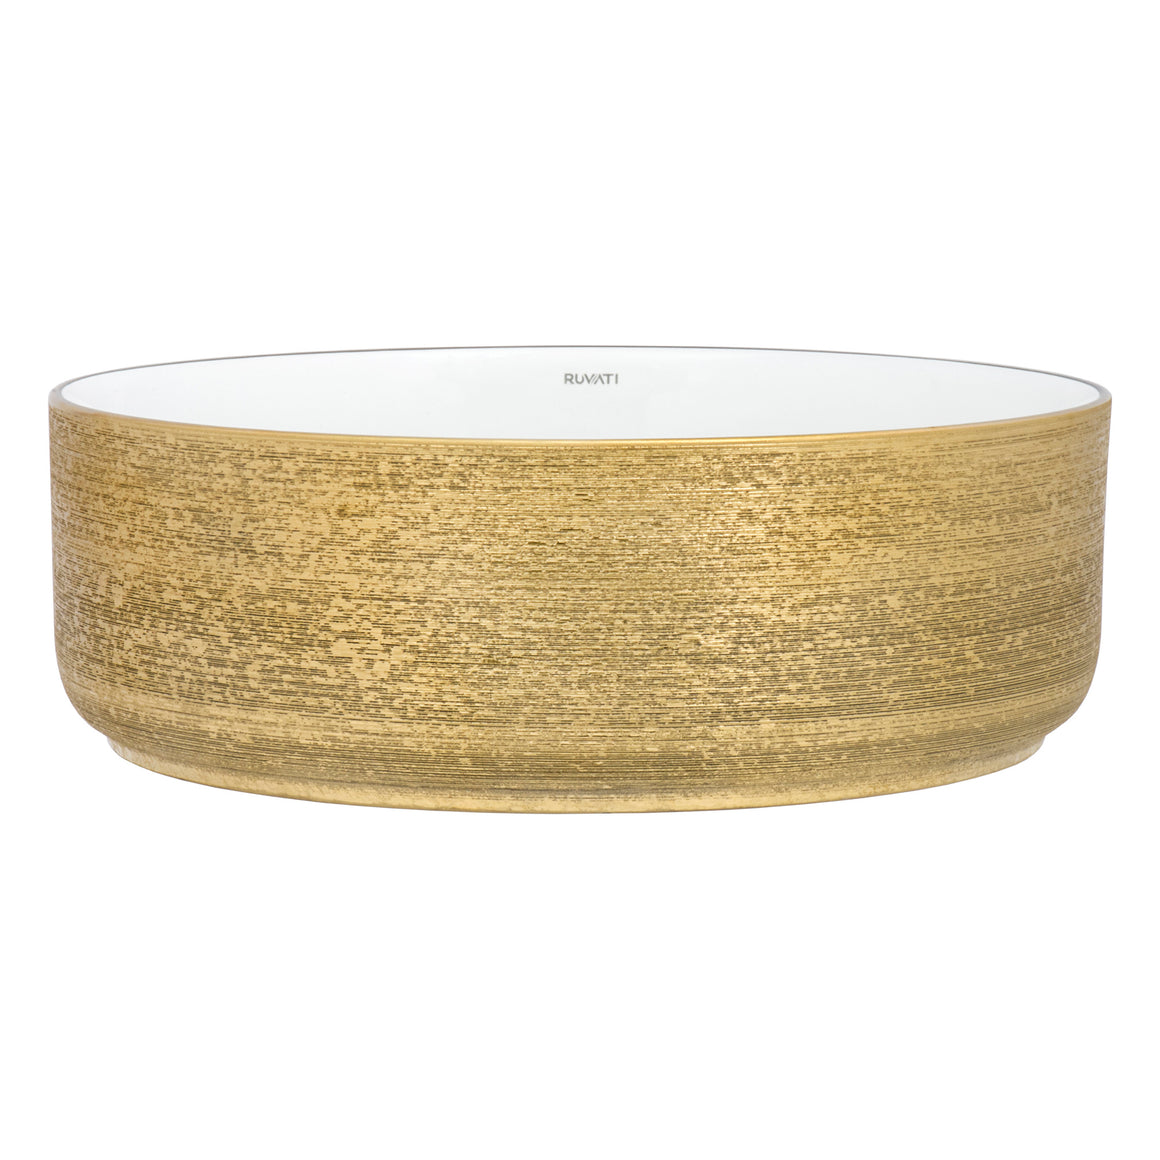 Ruvati 16 x 16 inch Bathroom Vessel Sink Gold Decorative Art Above Vanity Counter White Ceramic – RVB0314WG